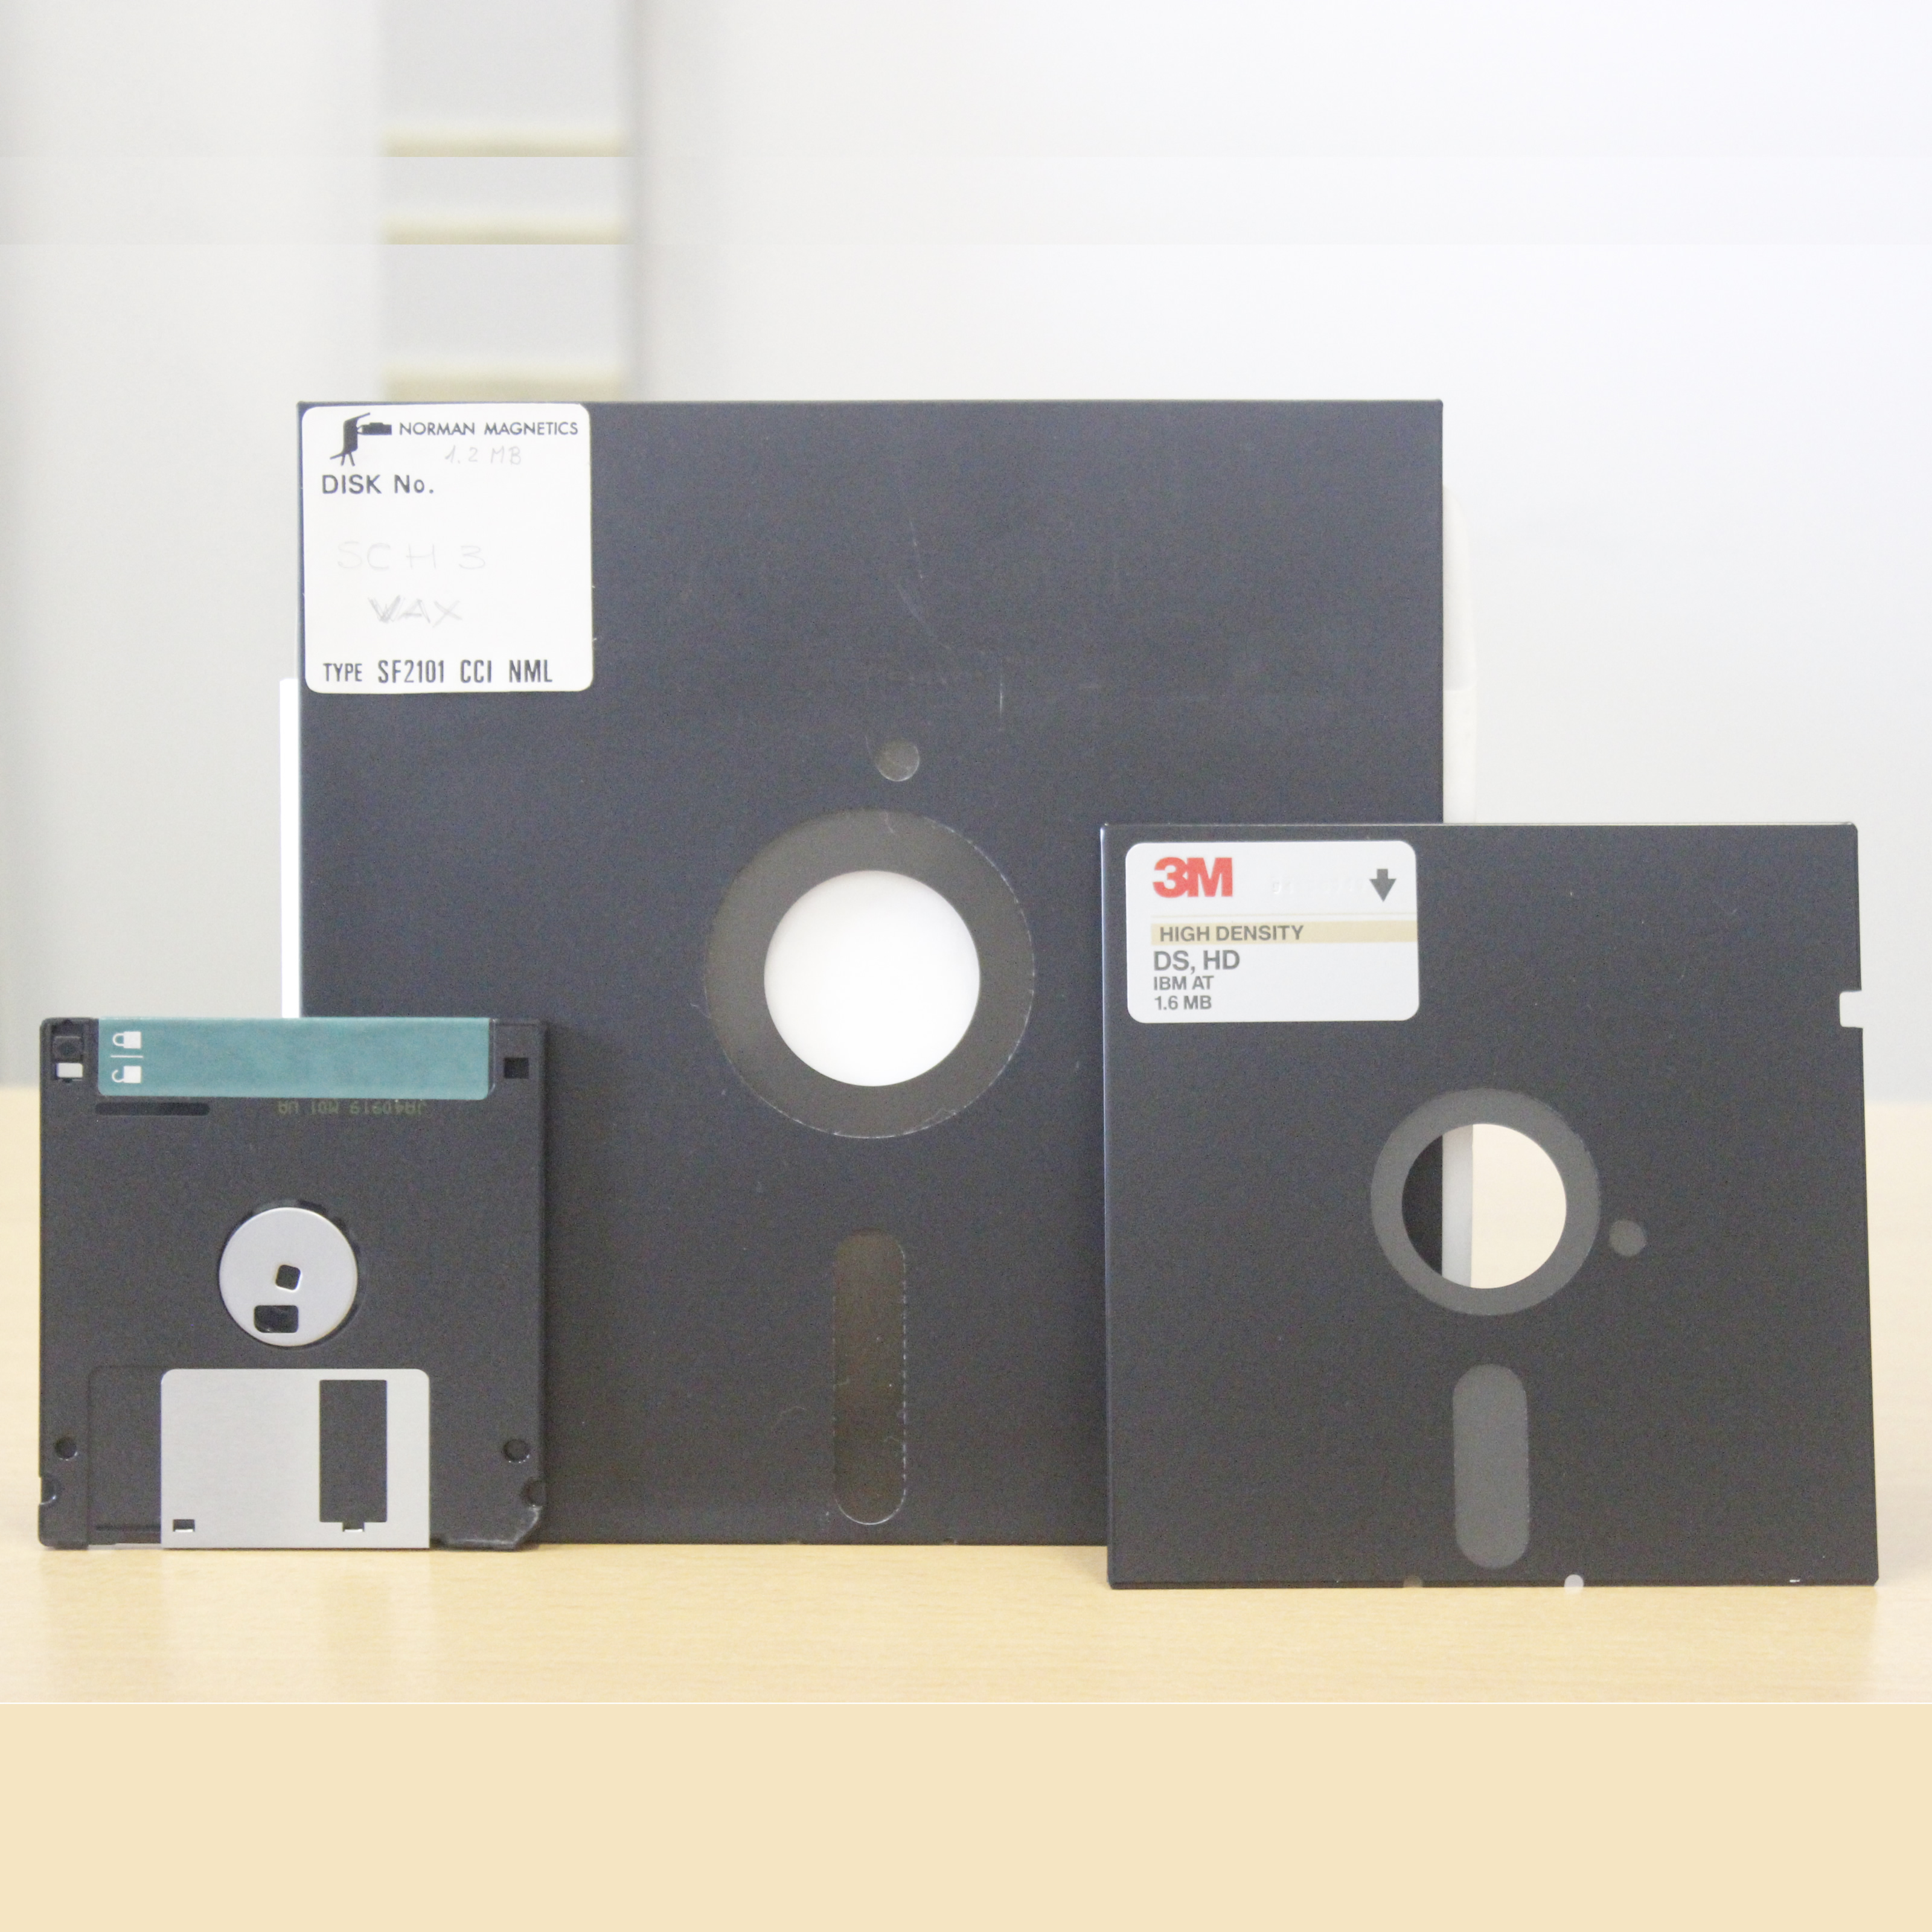 primo semestre 1995 7 FLOPPY HD 3,5" ORGINAL WISO DISK usati. 1,44 MB 